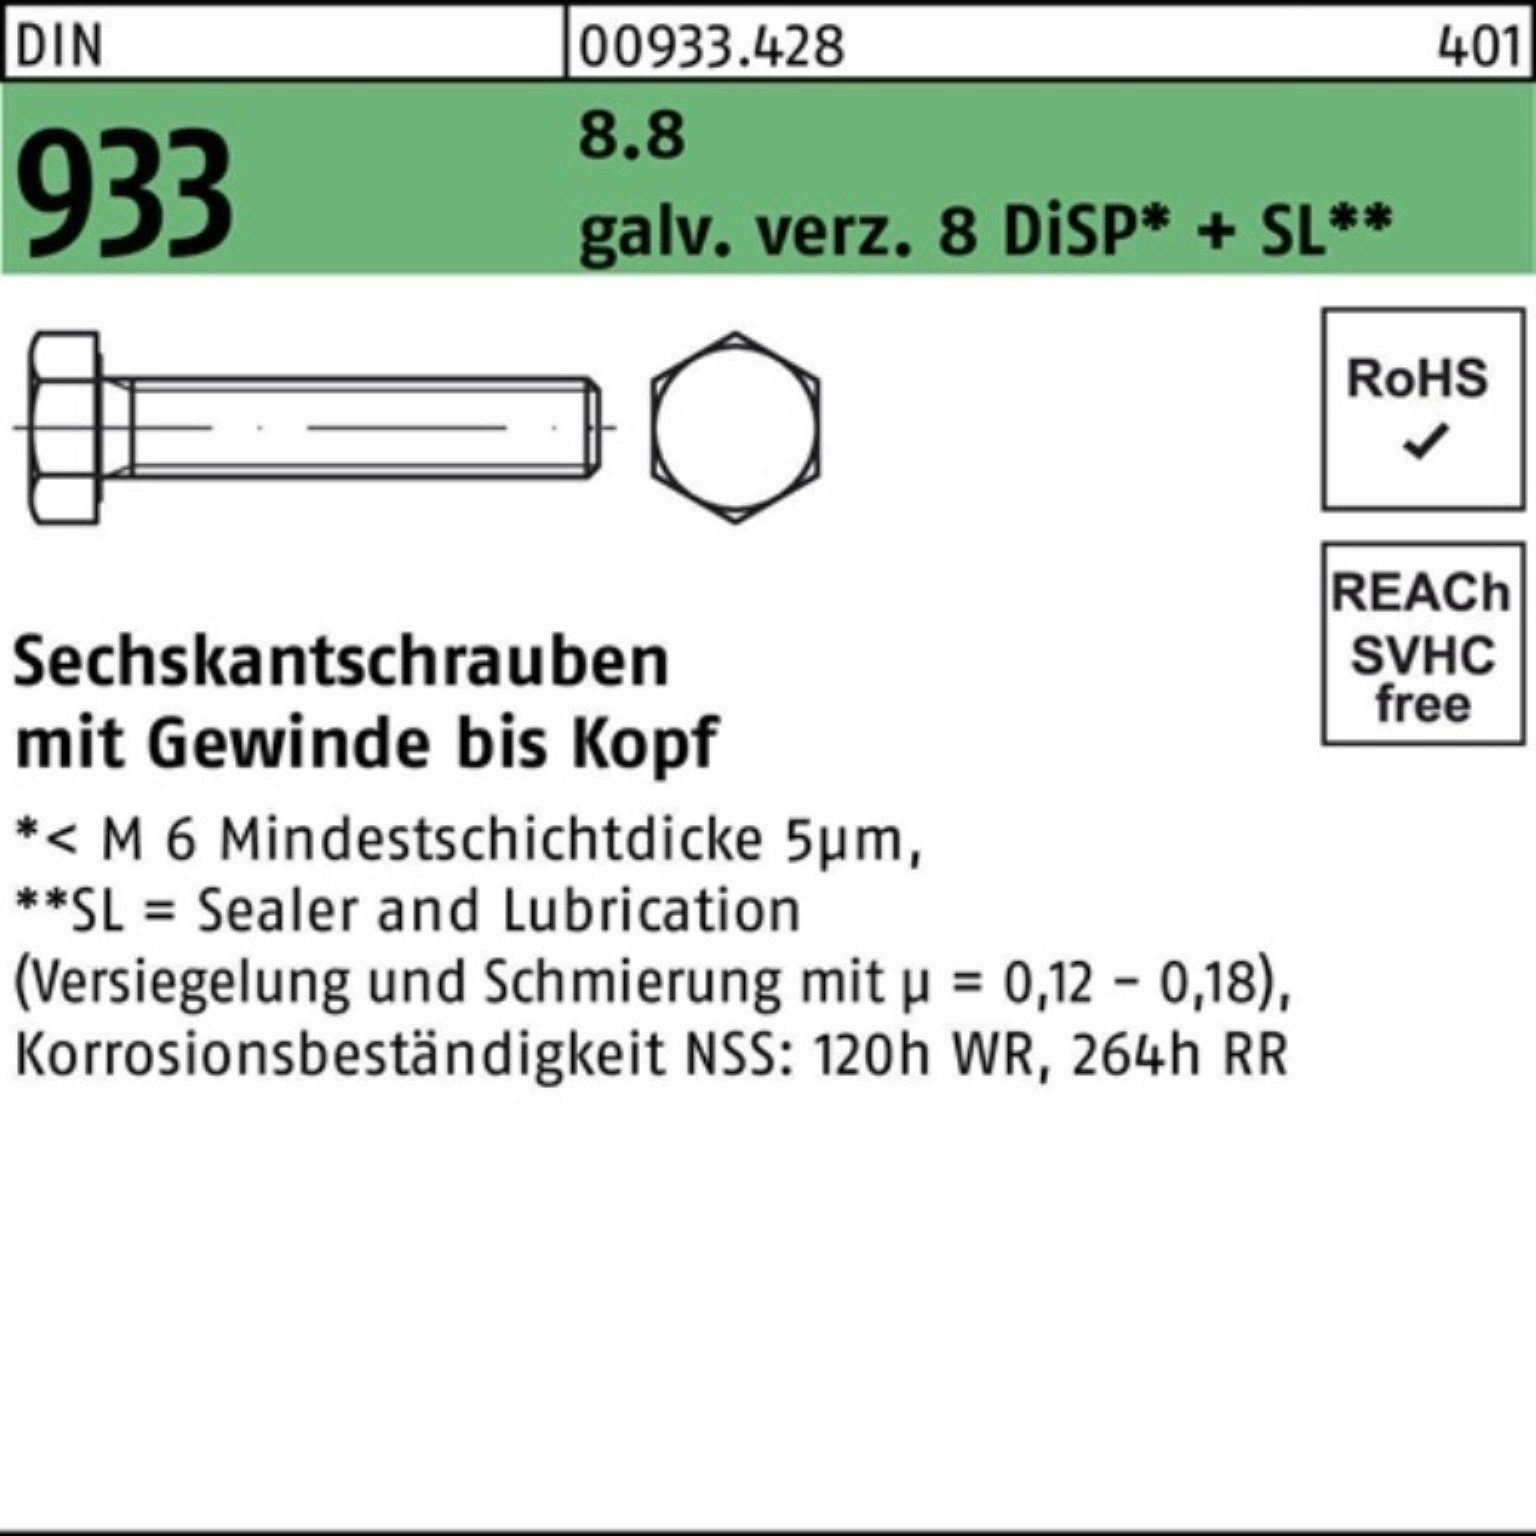 933 Pack Zn DiSP VG Sechskantschraube M4x gal 50 500er 35 Reyher 8.8 + SL DIN Sechskantschraube